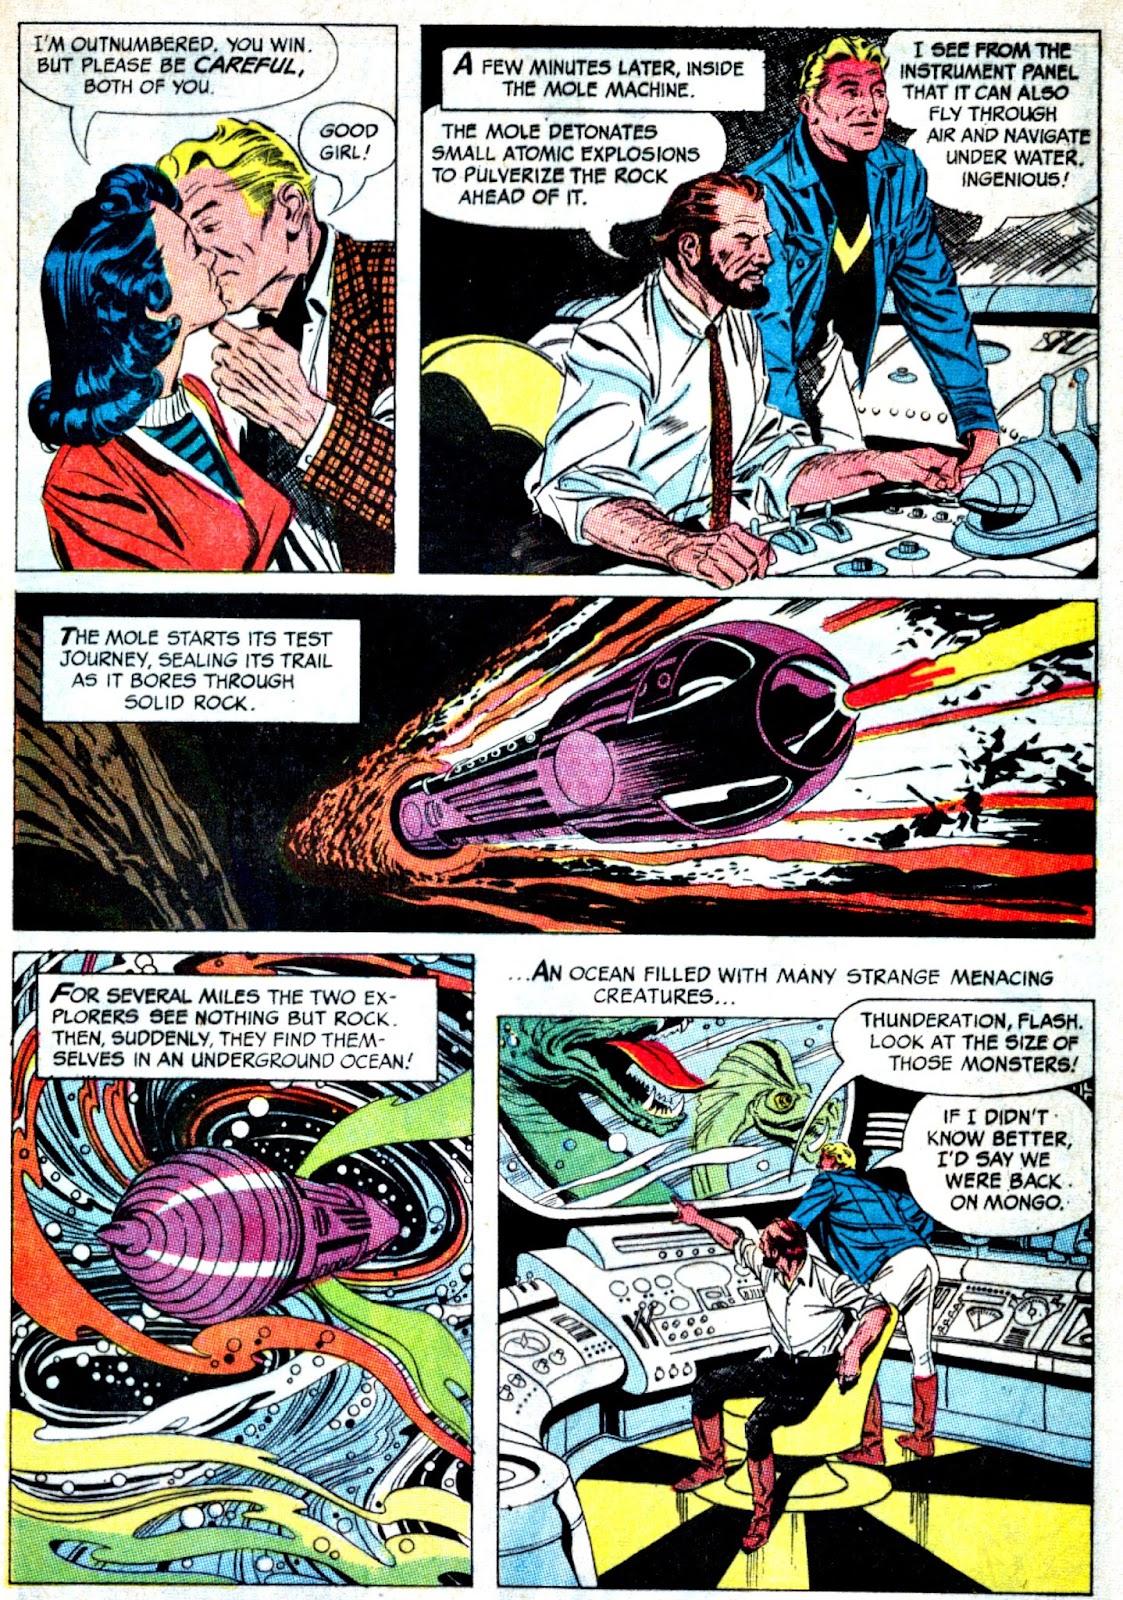 Flash Gordon (1966) issue 1 - Page 25